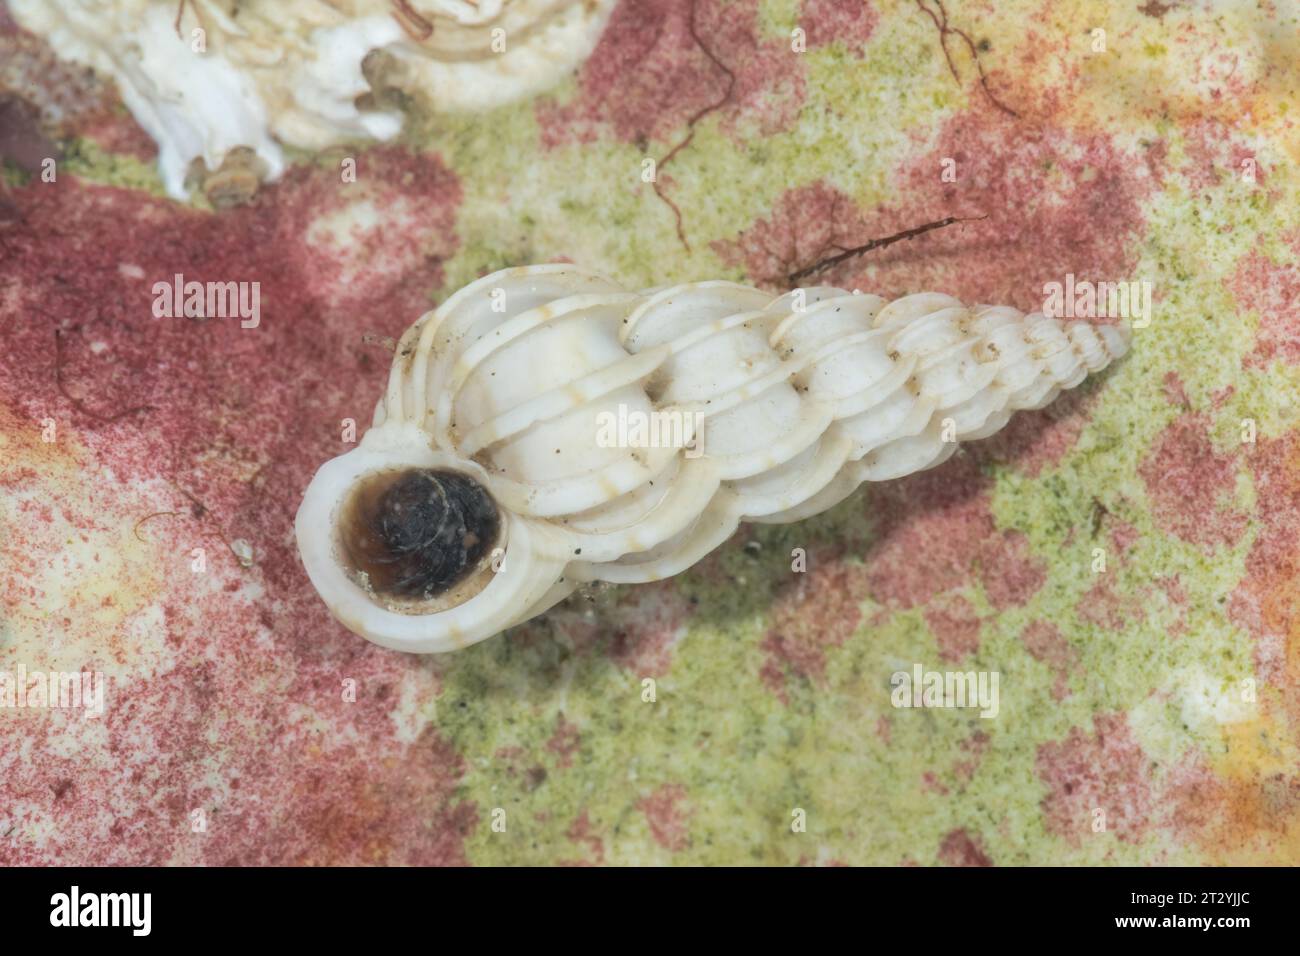 Live Common Wentletrap (Epitonium clathrus) with Operculum closed, Epitoniidae. Sussex, UK Stock Photo